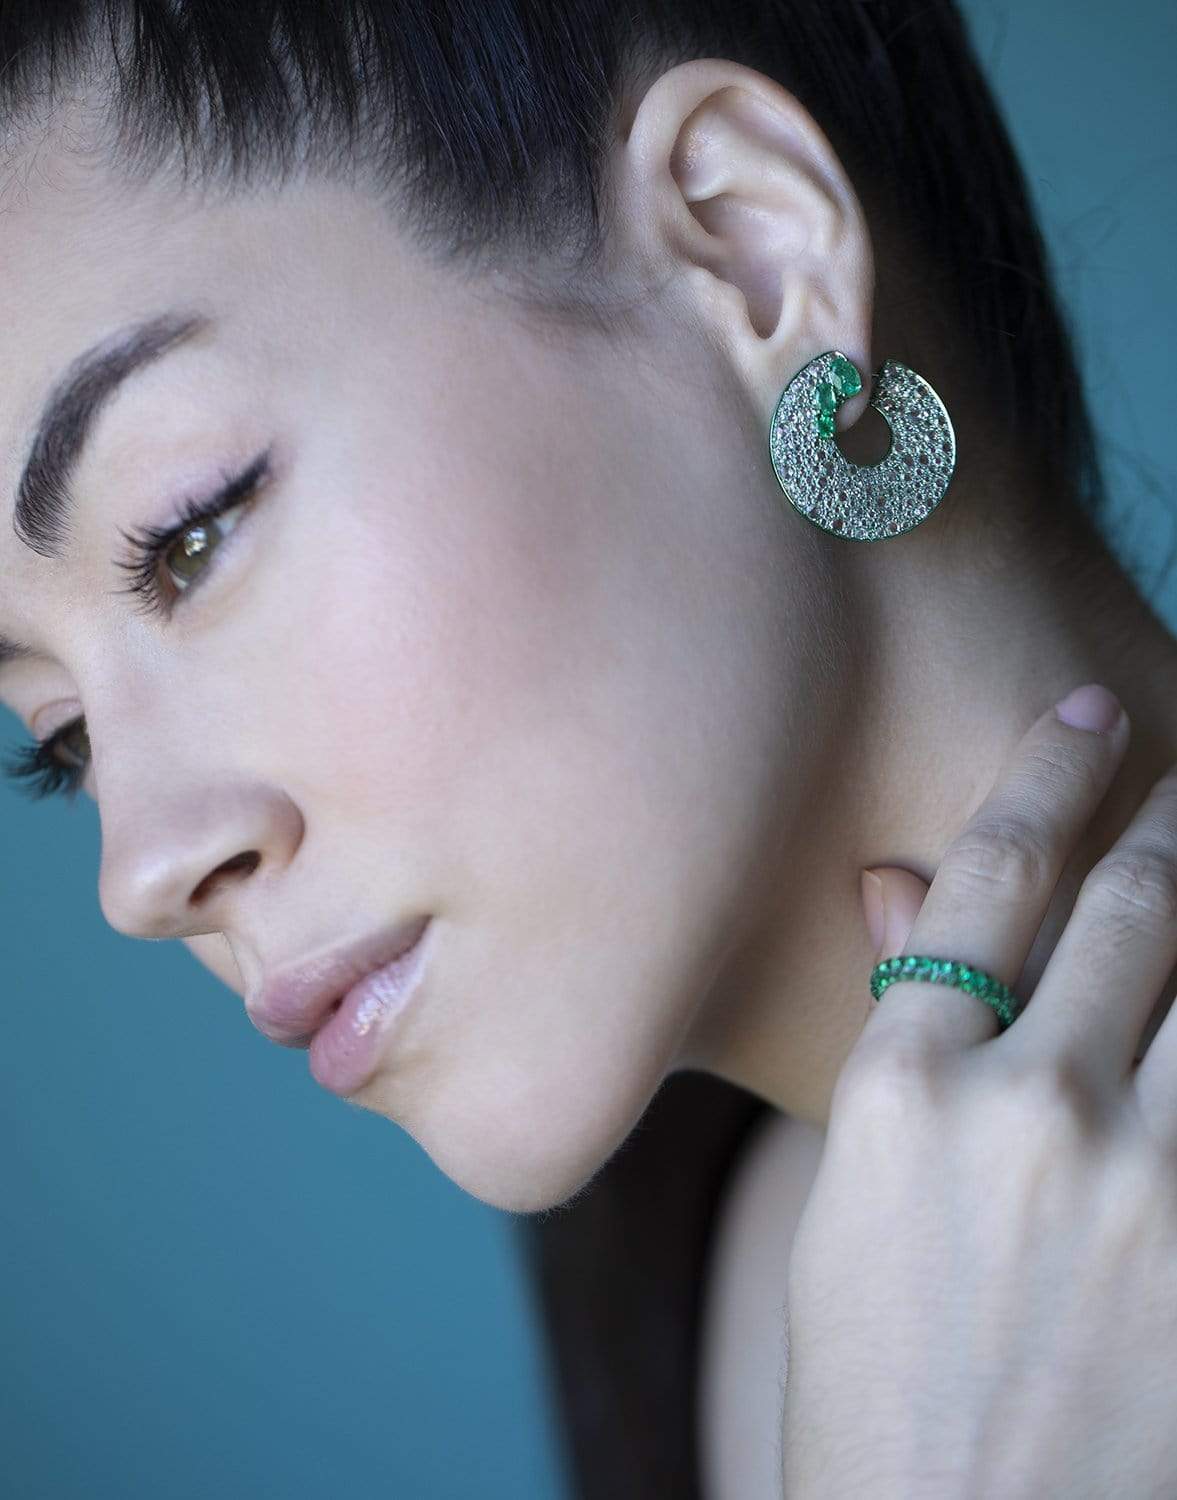 GRAZIELA-Emerald And Diamond Green Rhodium Earrings-WHITE GOLD